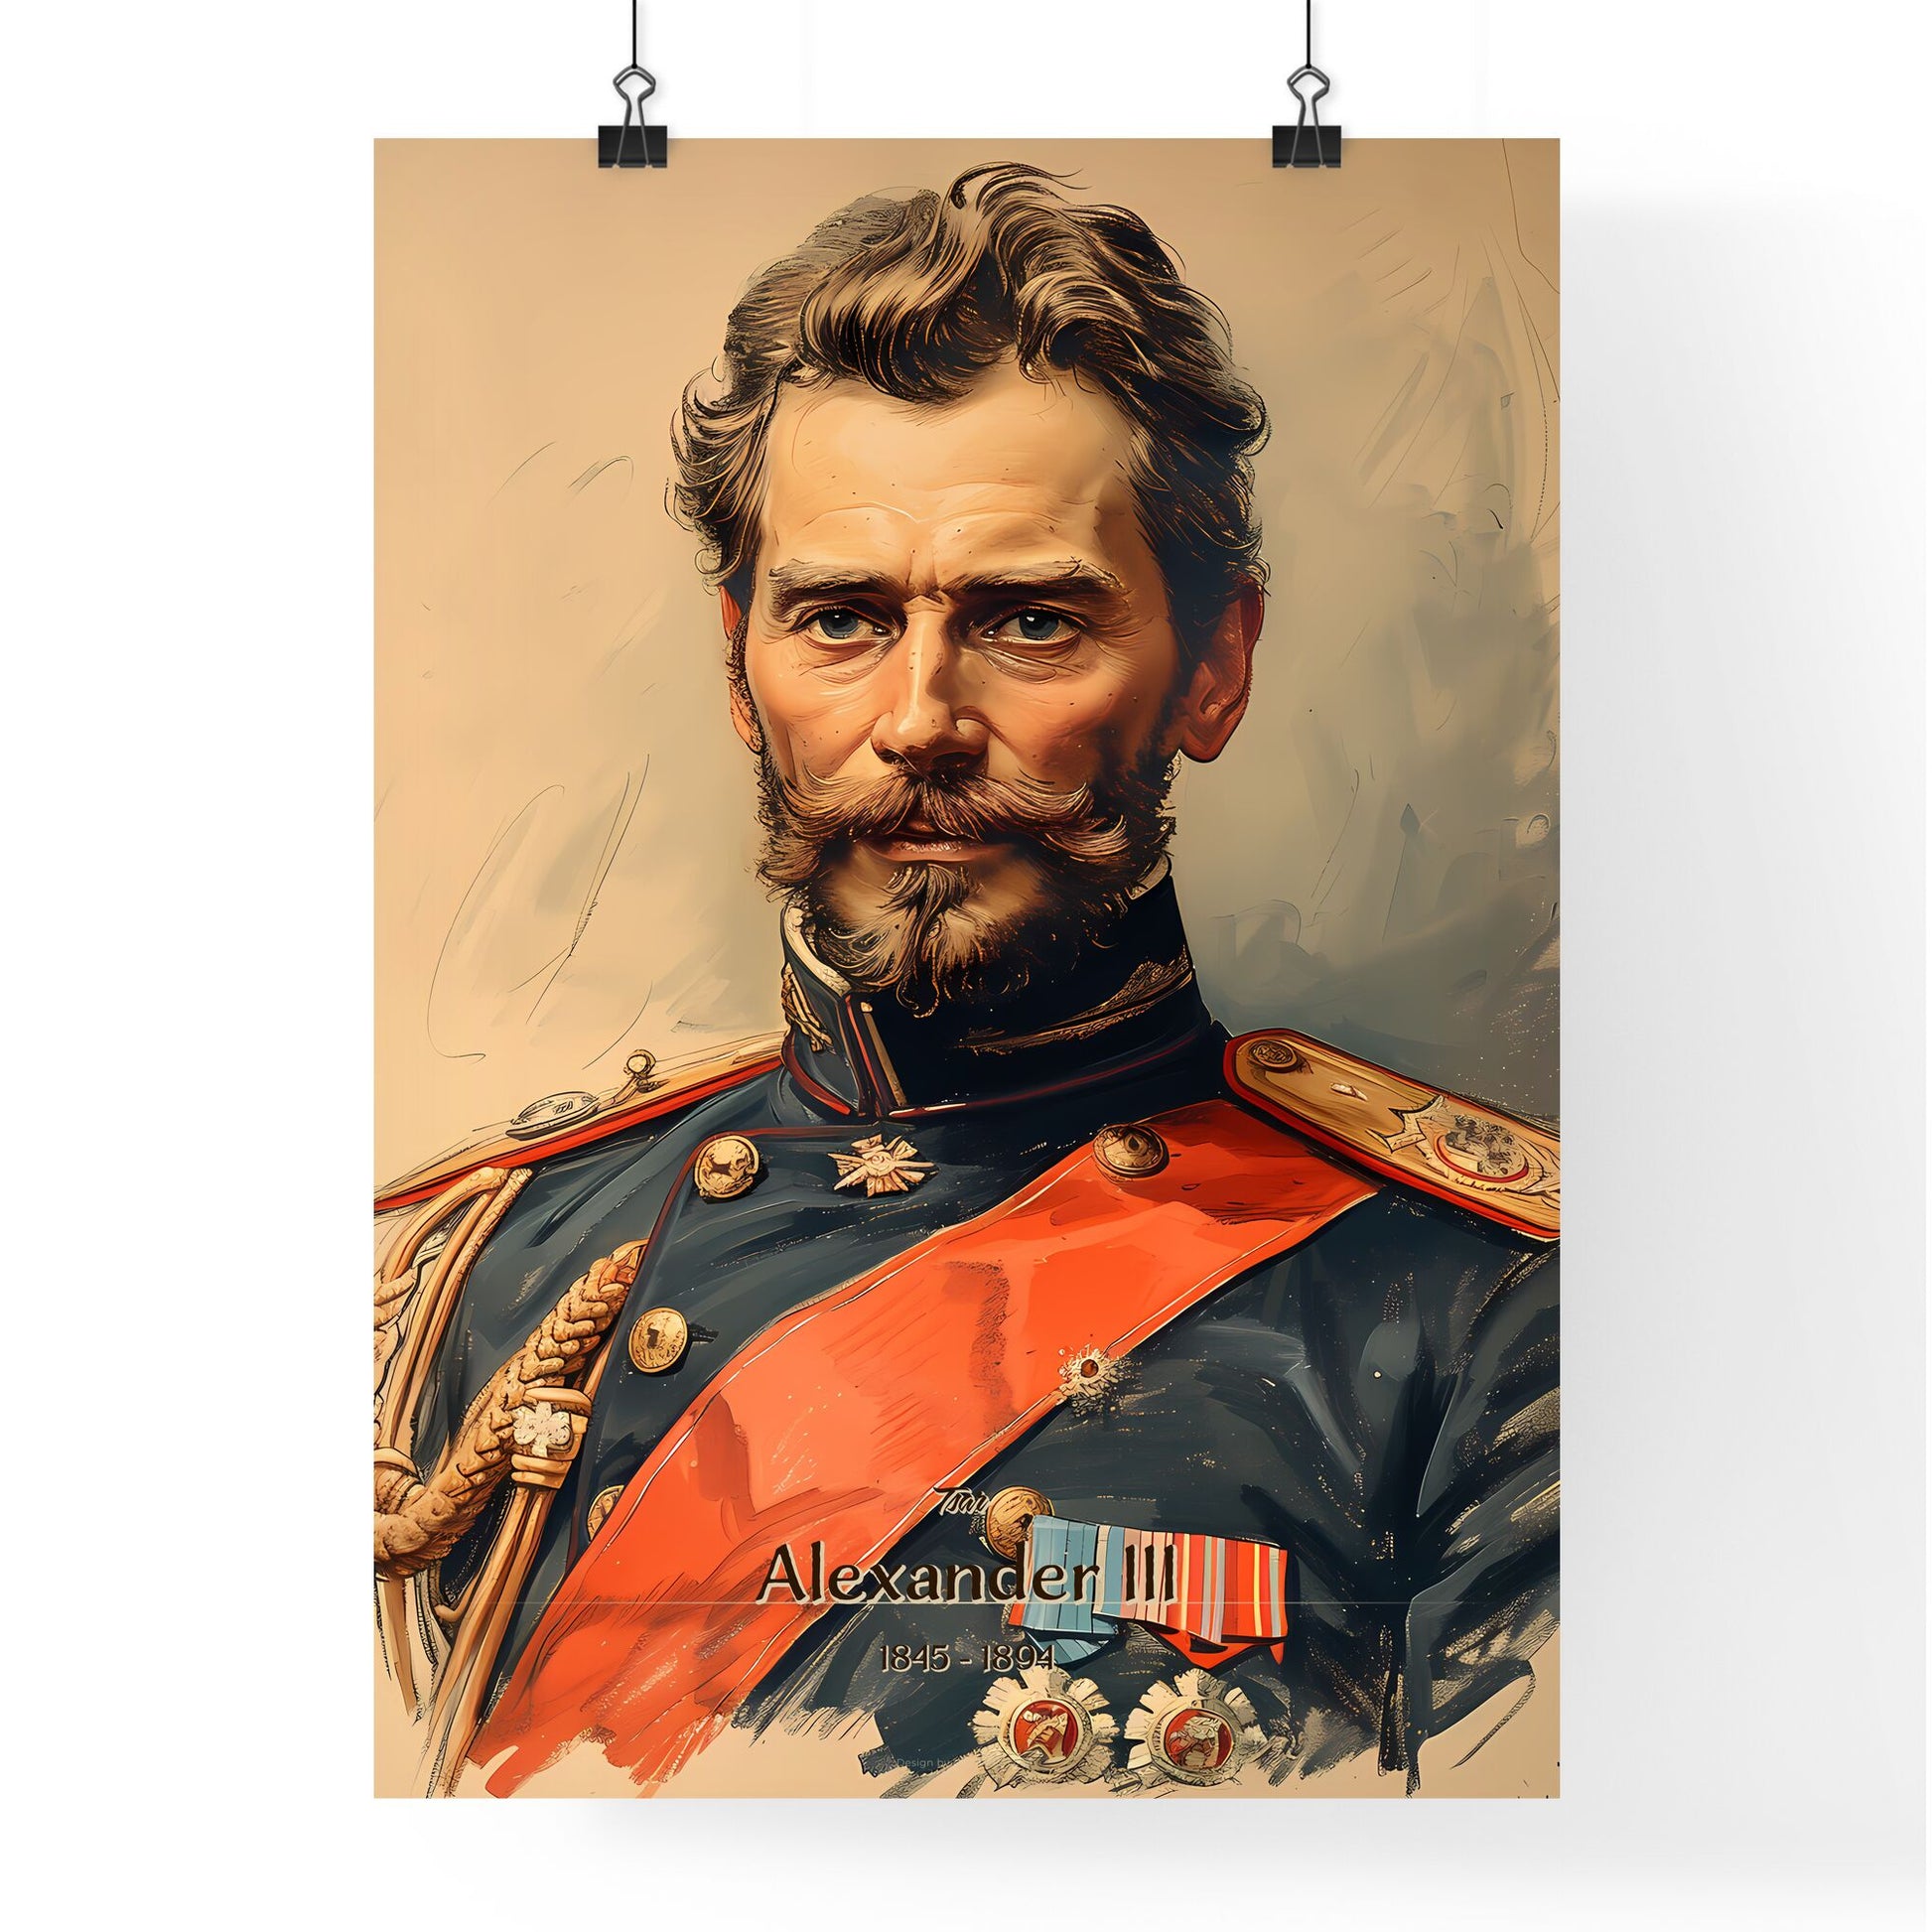 Tsar, Alexander III, 1845 - 1894, A Poster of a man in a military uniform Default Title